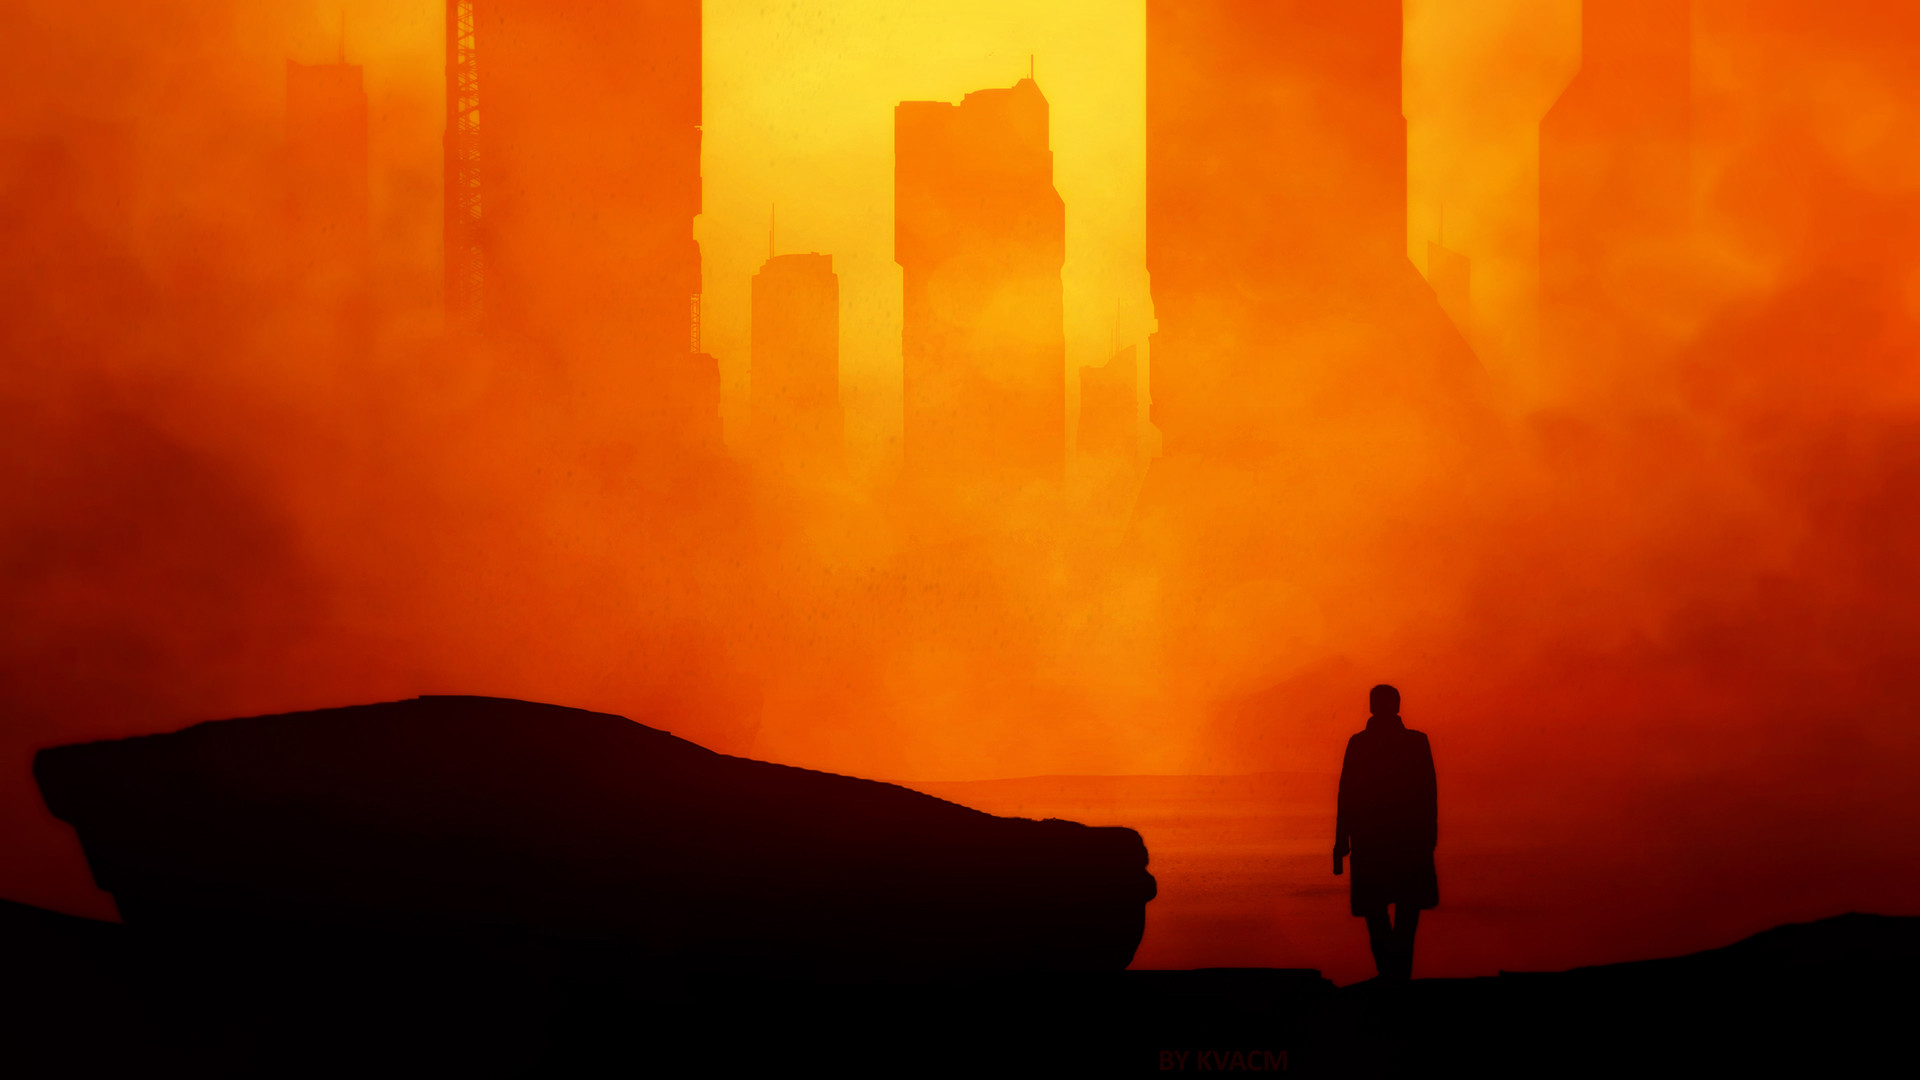 Blade Runner 2049 Building City Futuristic Silhouette Orange Color 1920x1080